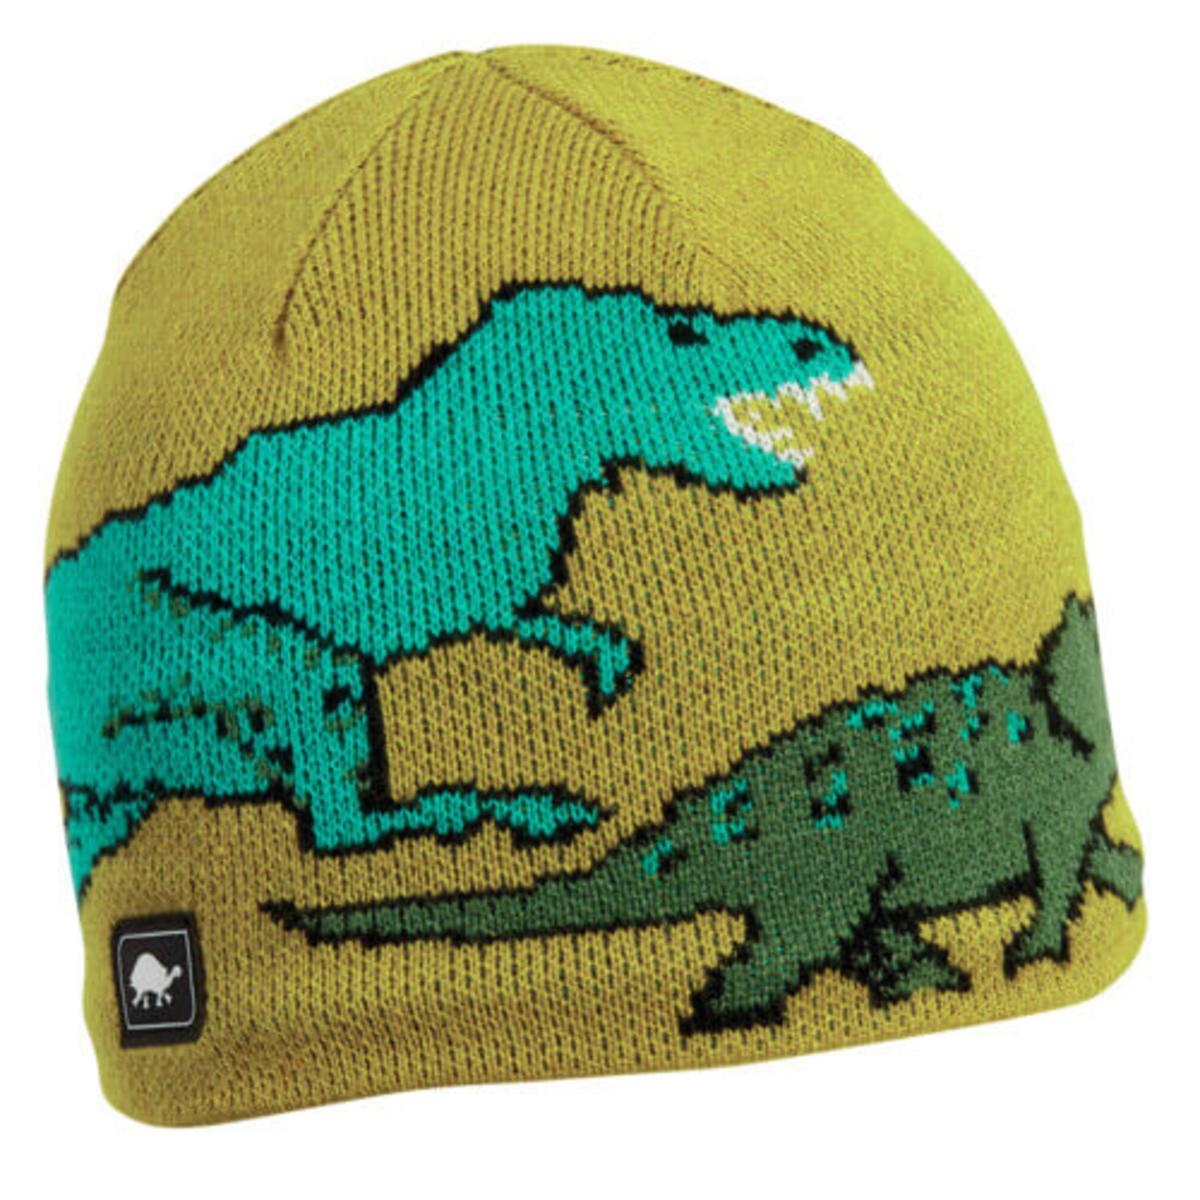 Turtle Fur Kids Jurassic Dinosaur Winter Beanie Hat Lime